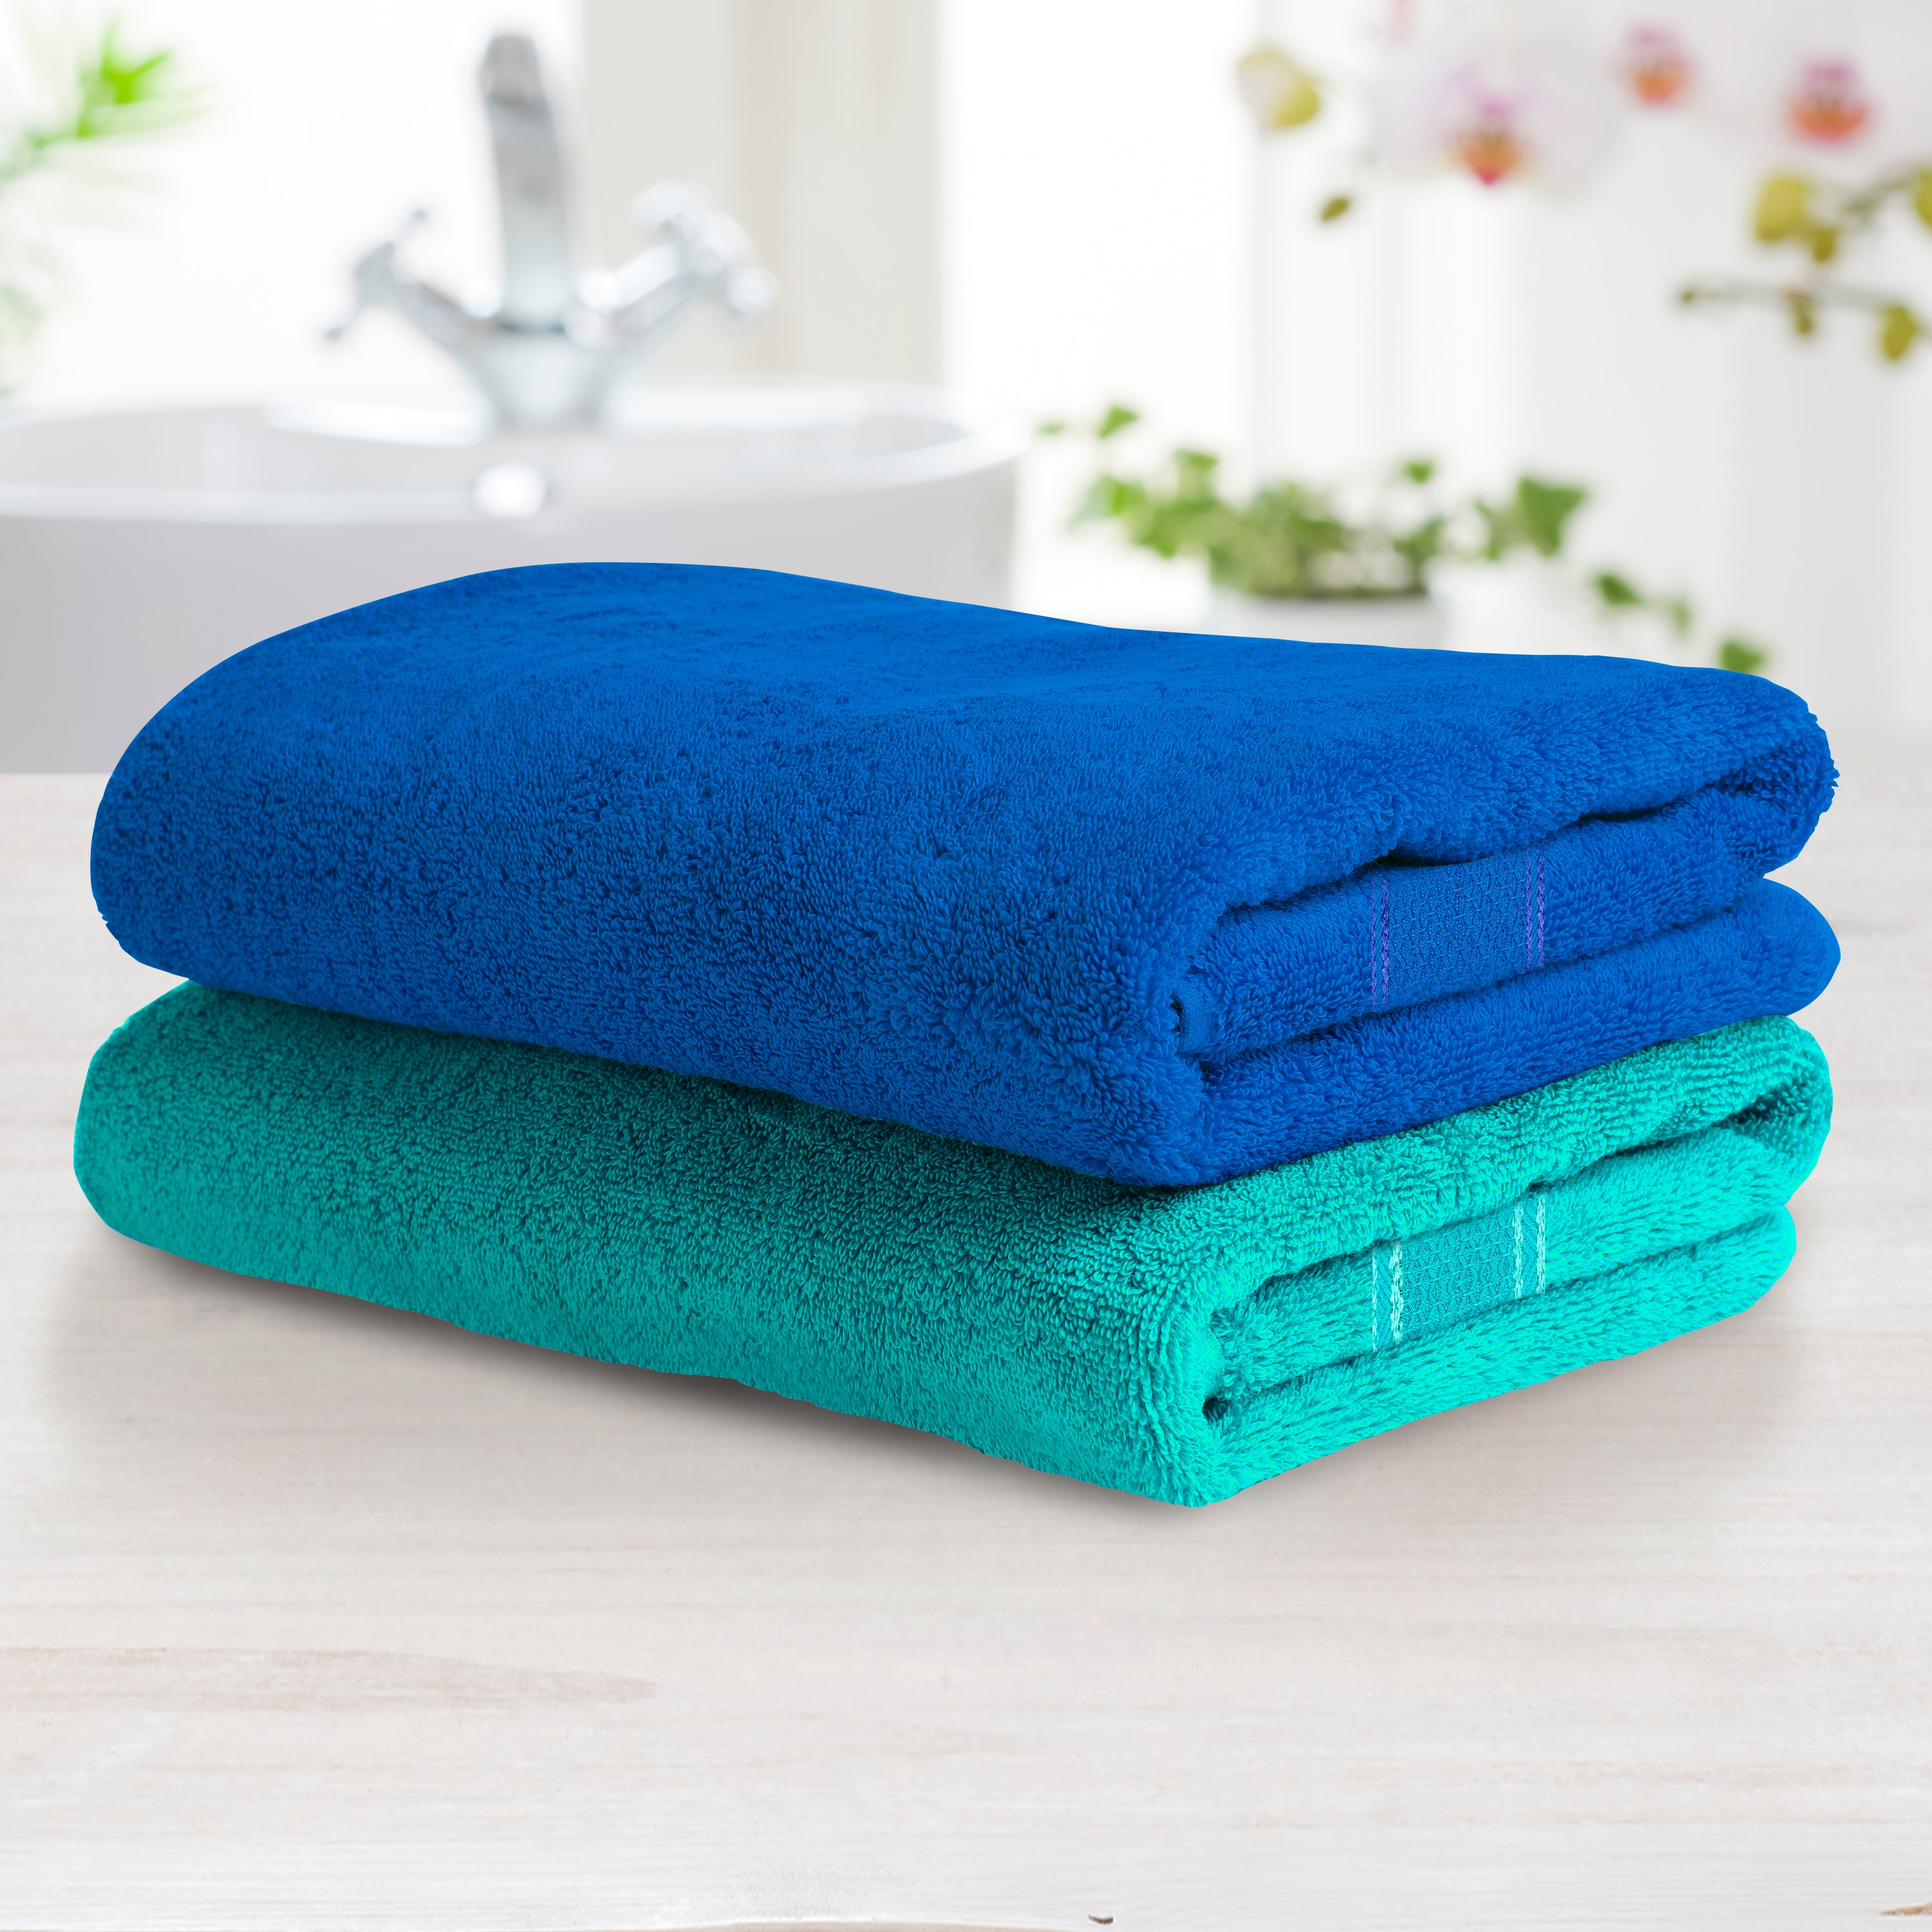 Buy Aquacado Bath Towel Set of 2 Turq Blue & Irish Blue Online